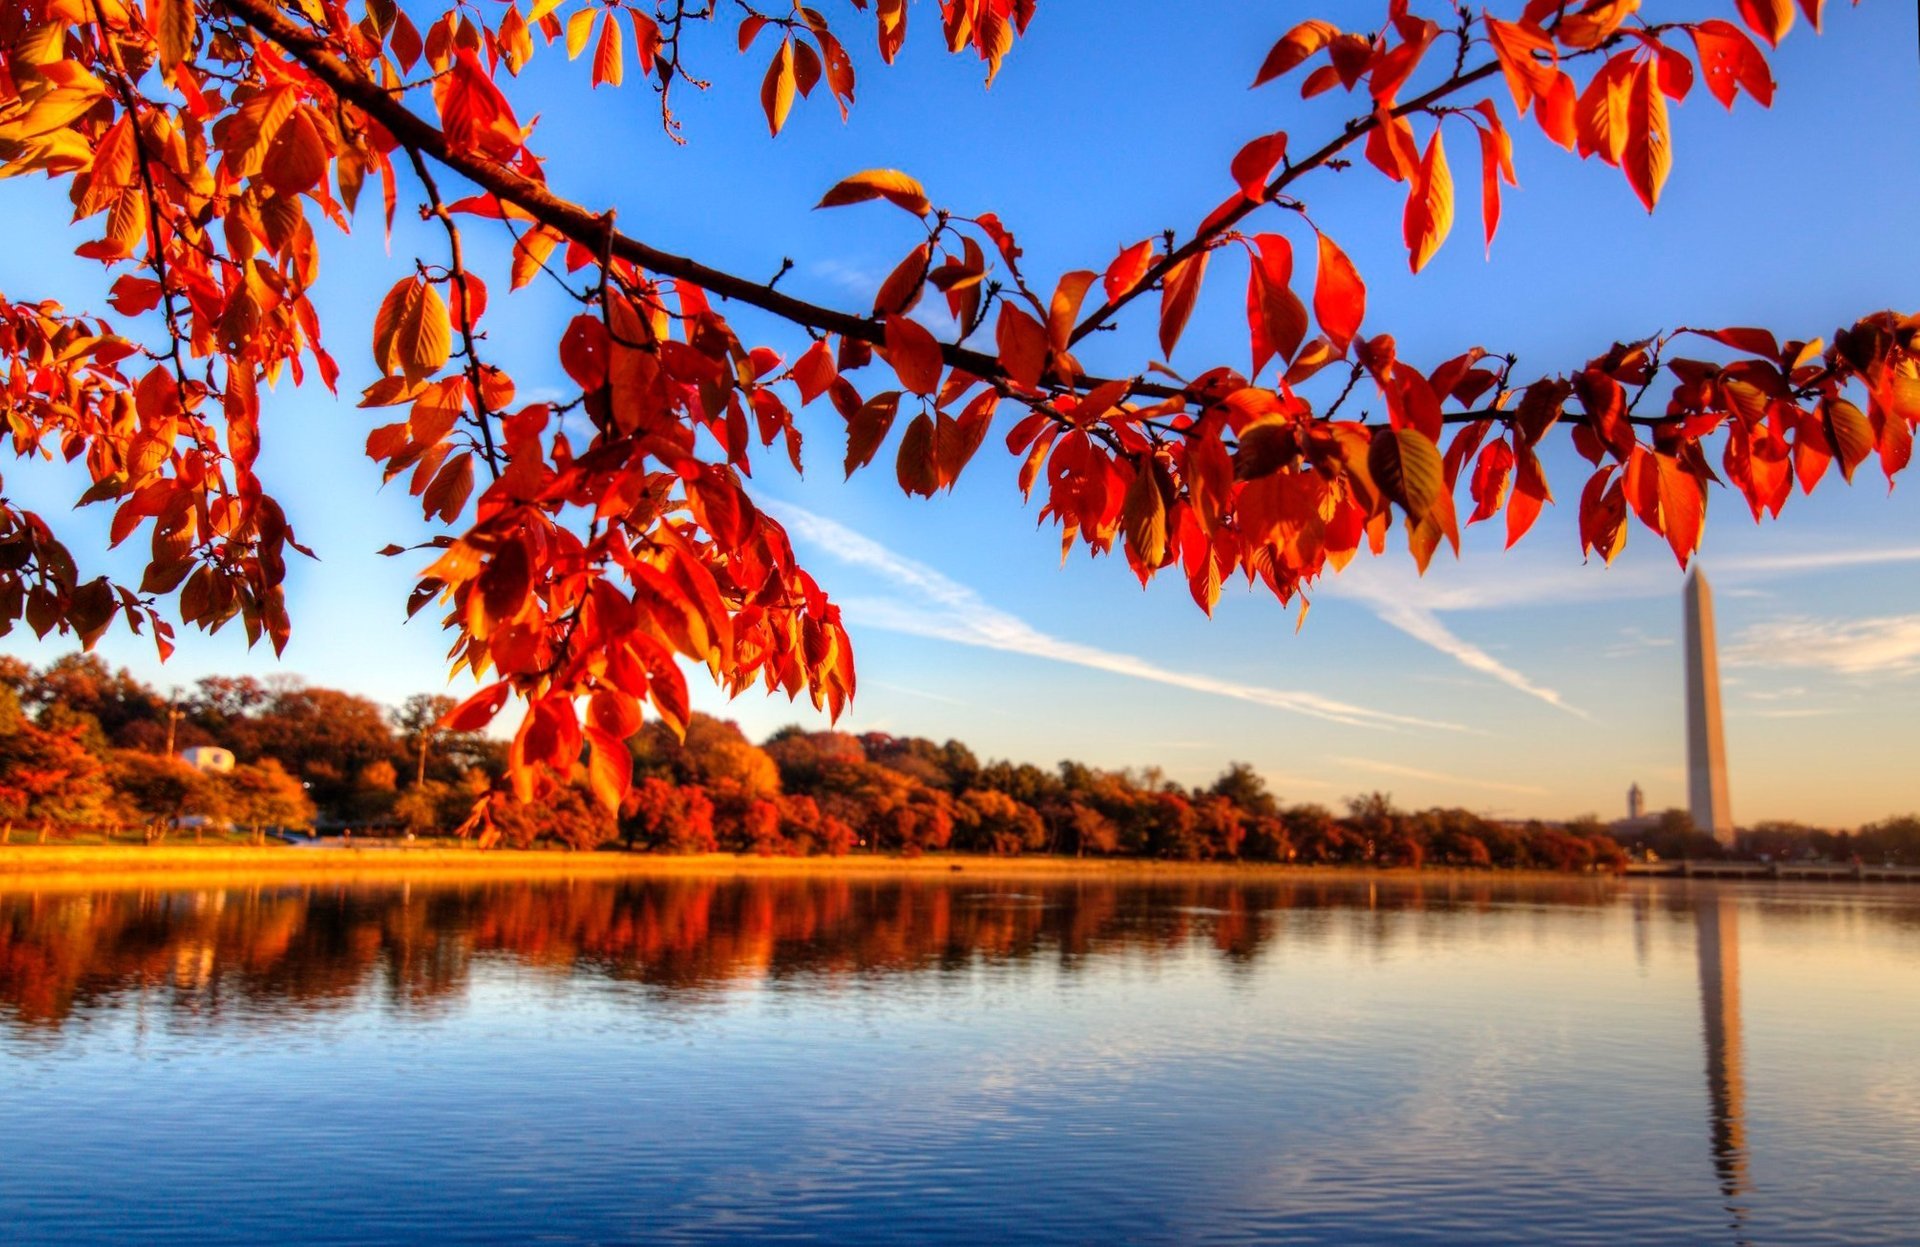 Fall Foliage in and around Washington, D.C.